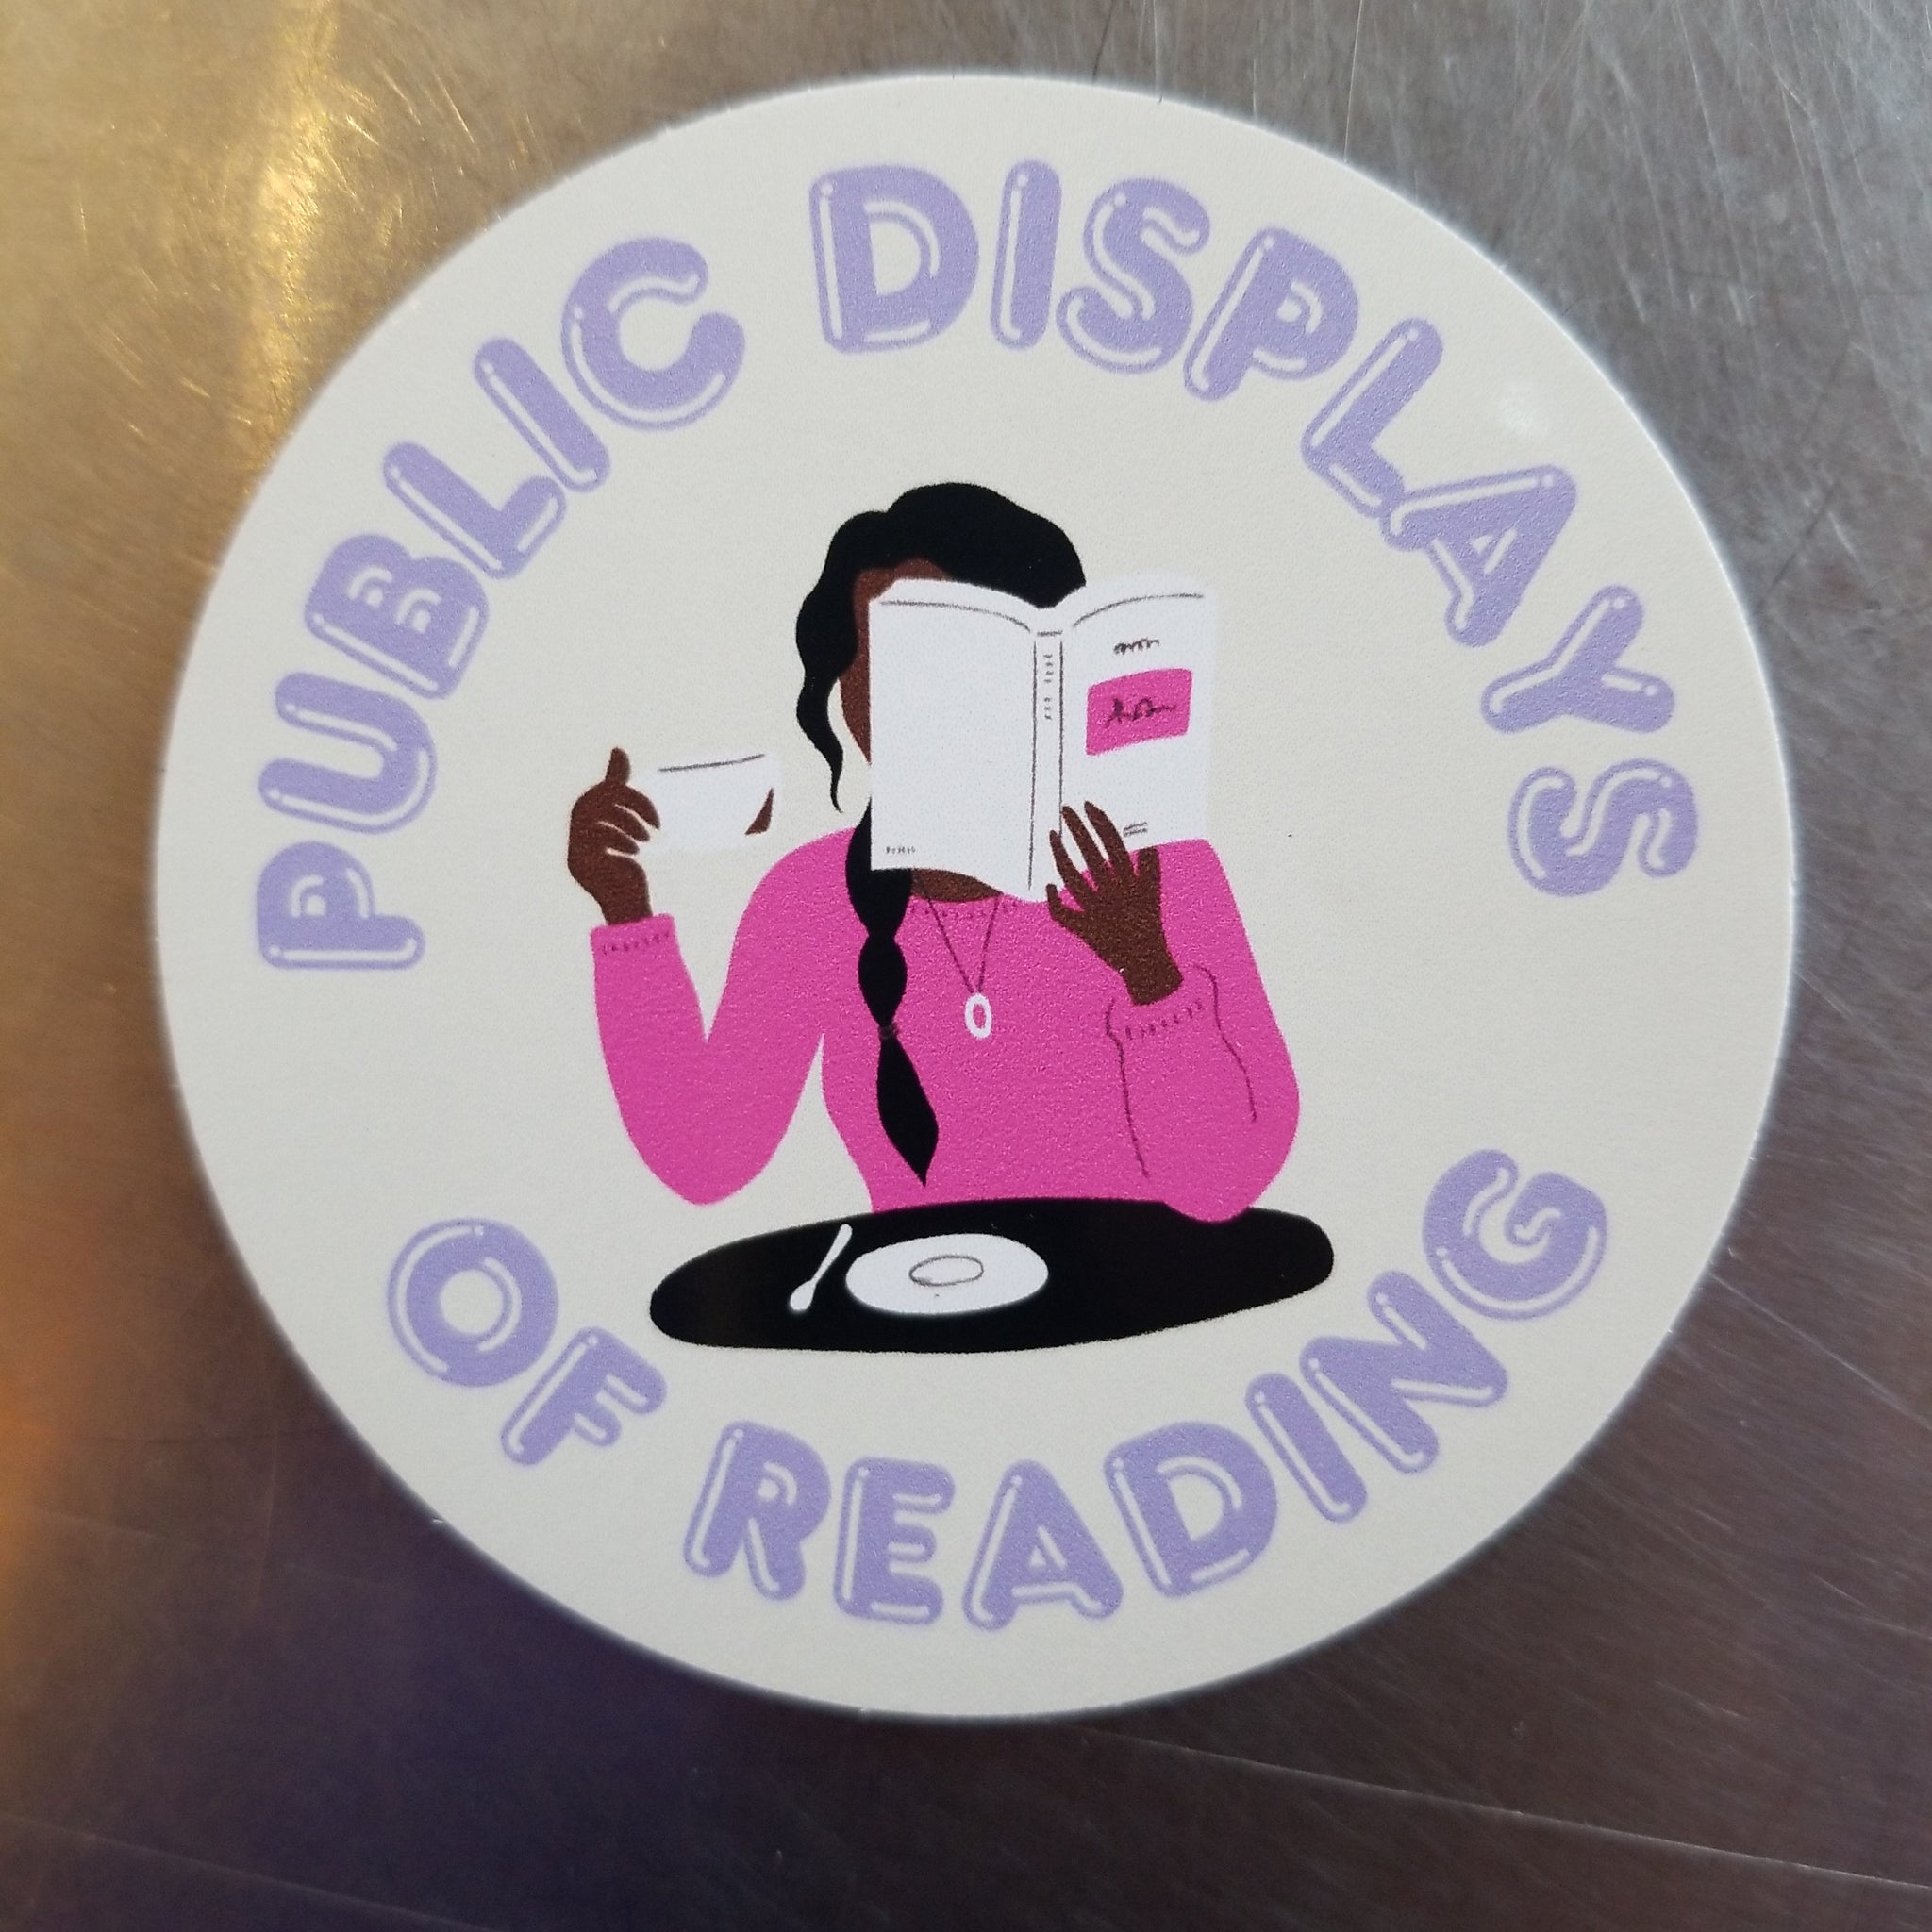 Public Displays of Reading Sticker